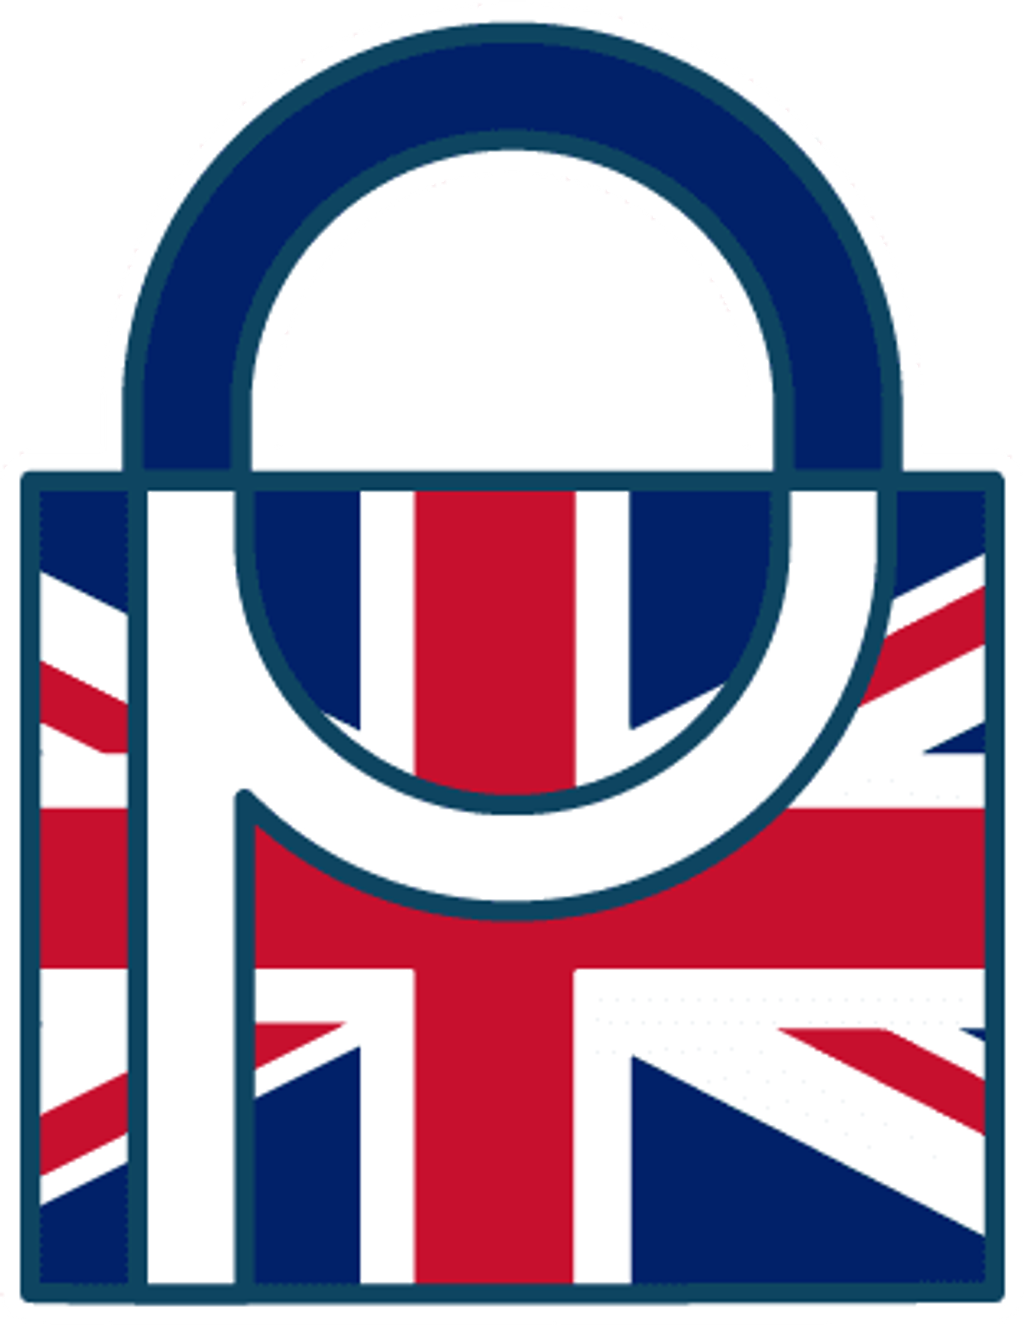 Logo in the shape of a lock representing Prighter's UK-GDPR representation service.